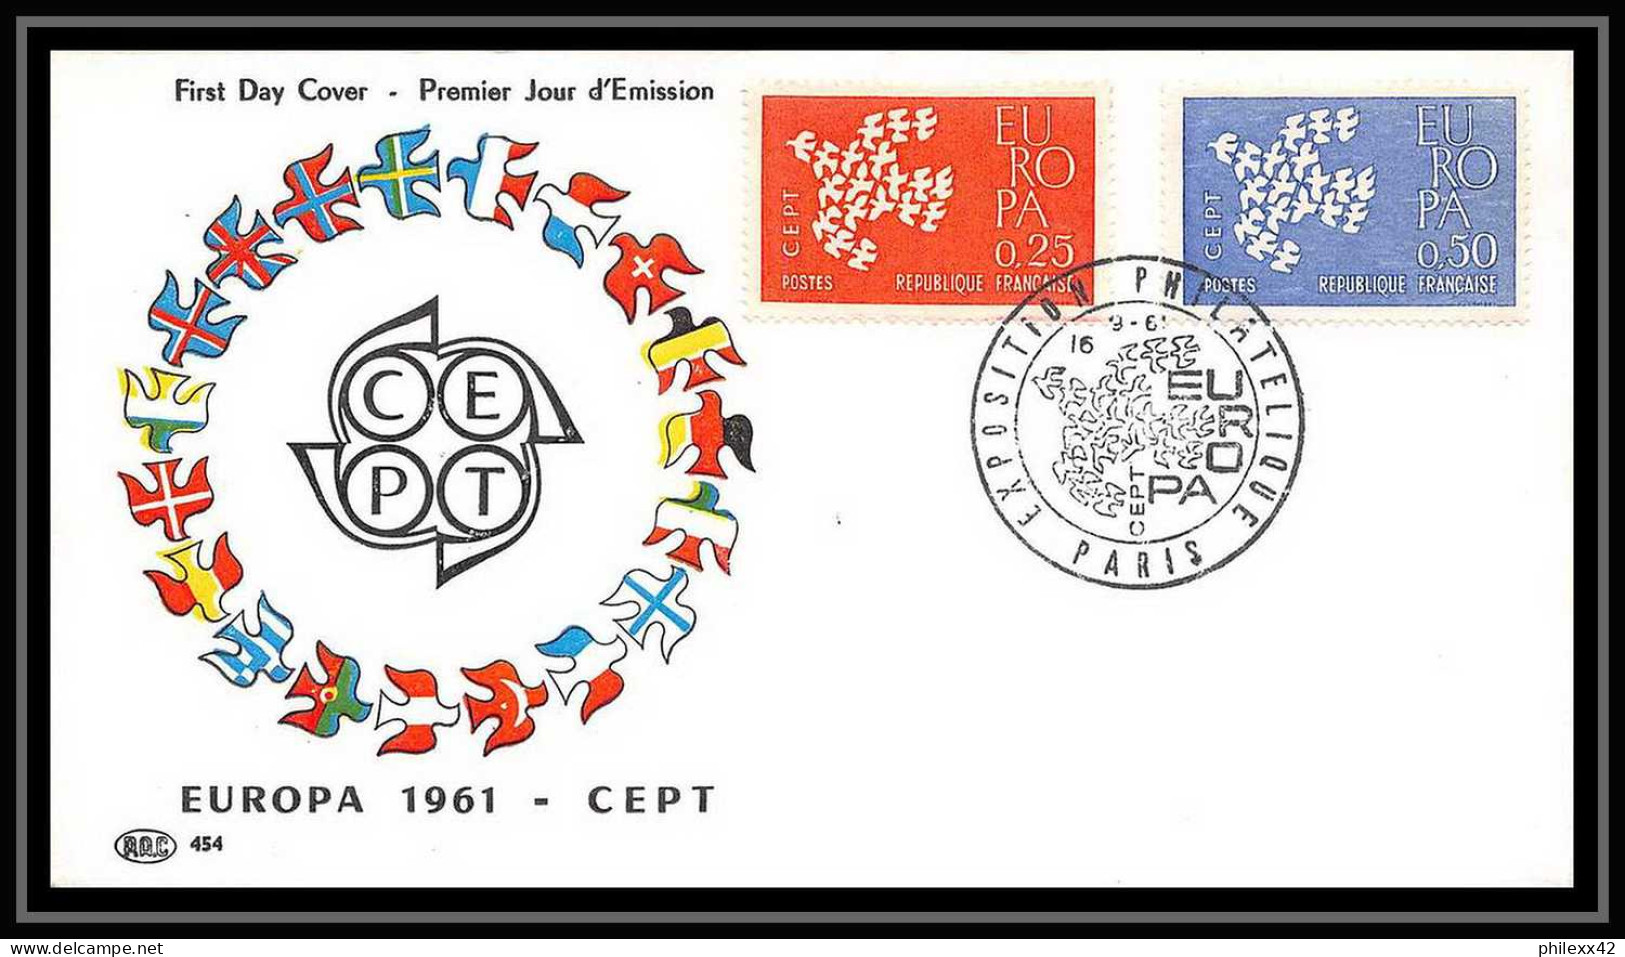 16886 - France Lettre Premier jour (fdc cover) N° 1309 /1310 17 lettres différentes collection rare europa 1961